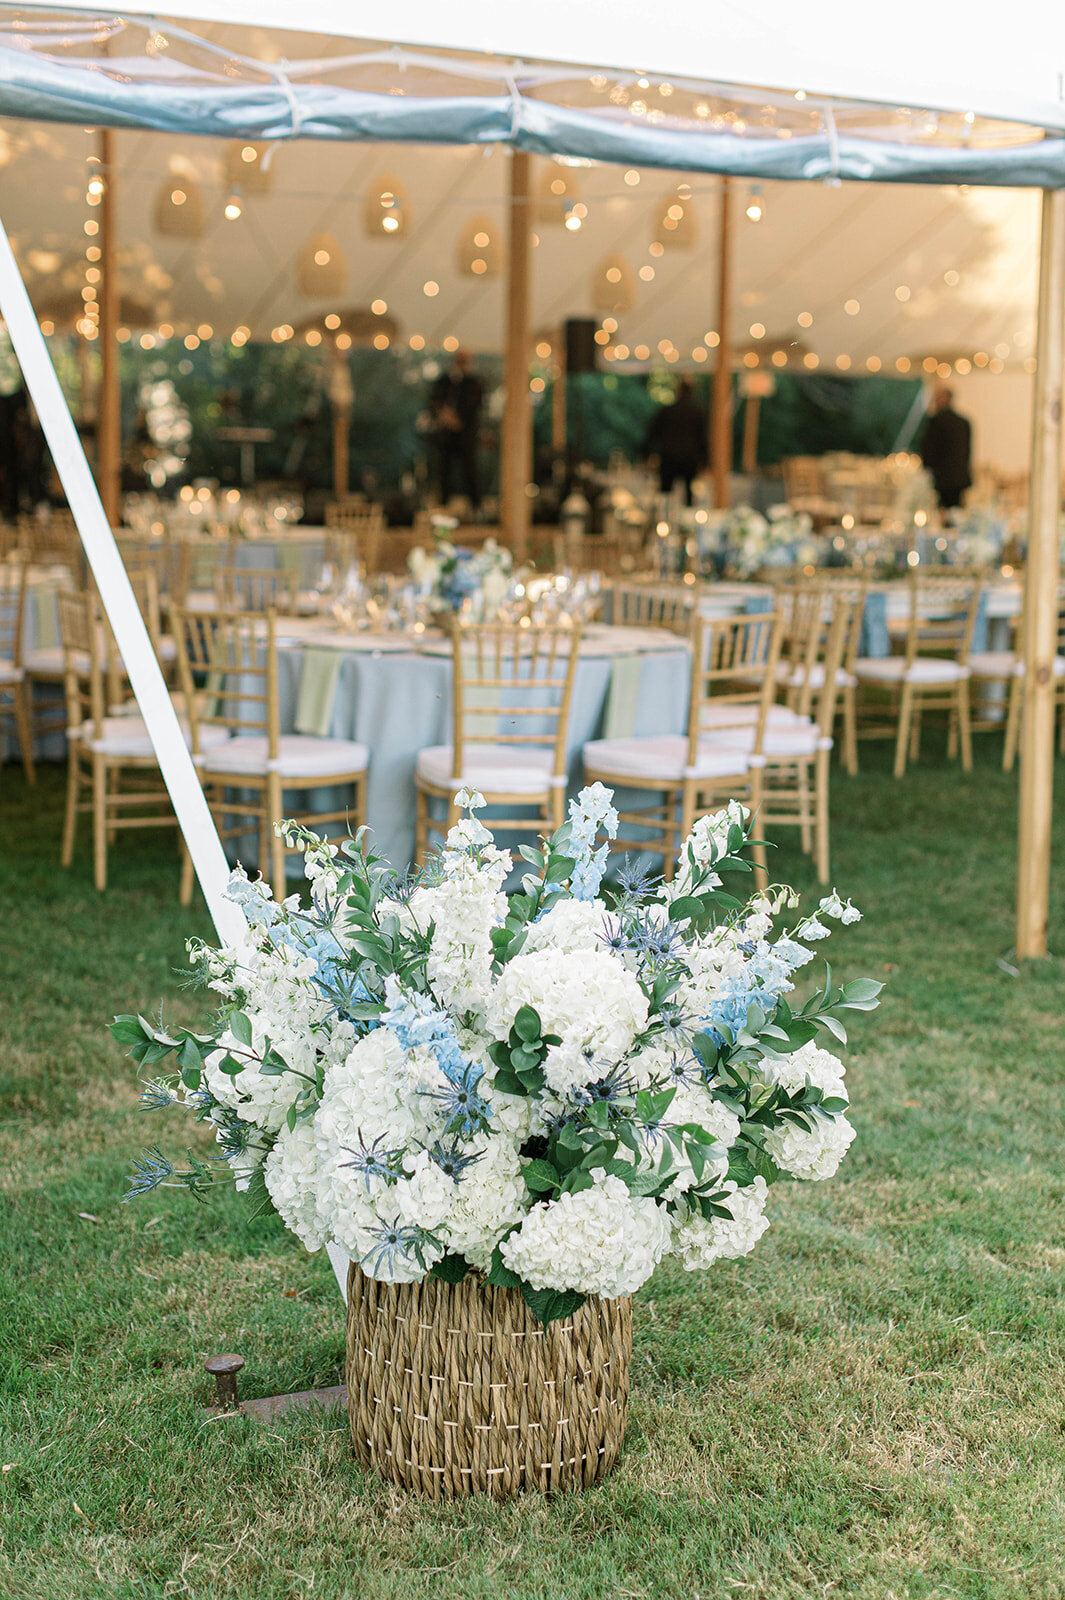 Kate-Murtaugh-Events-summer-flowers-tent-entrance-Cape-Cod-Hyannis-Port-Kennedy-Compound-wedding